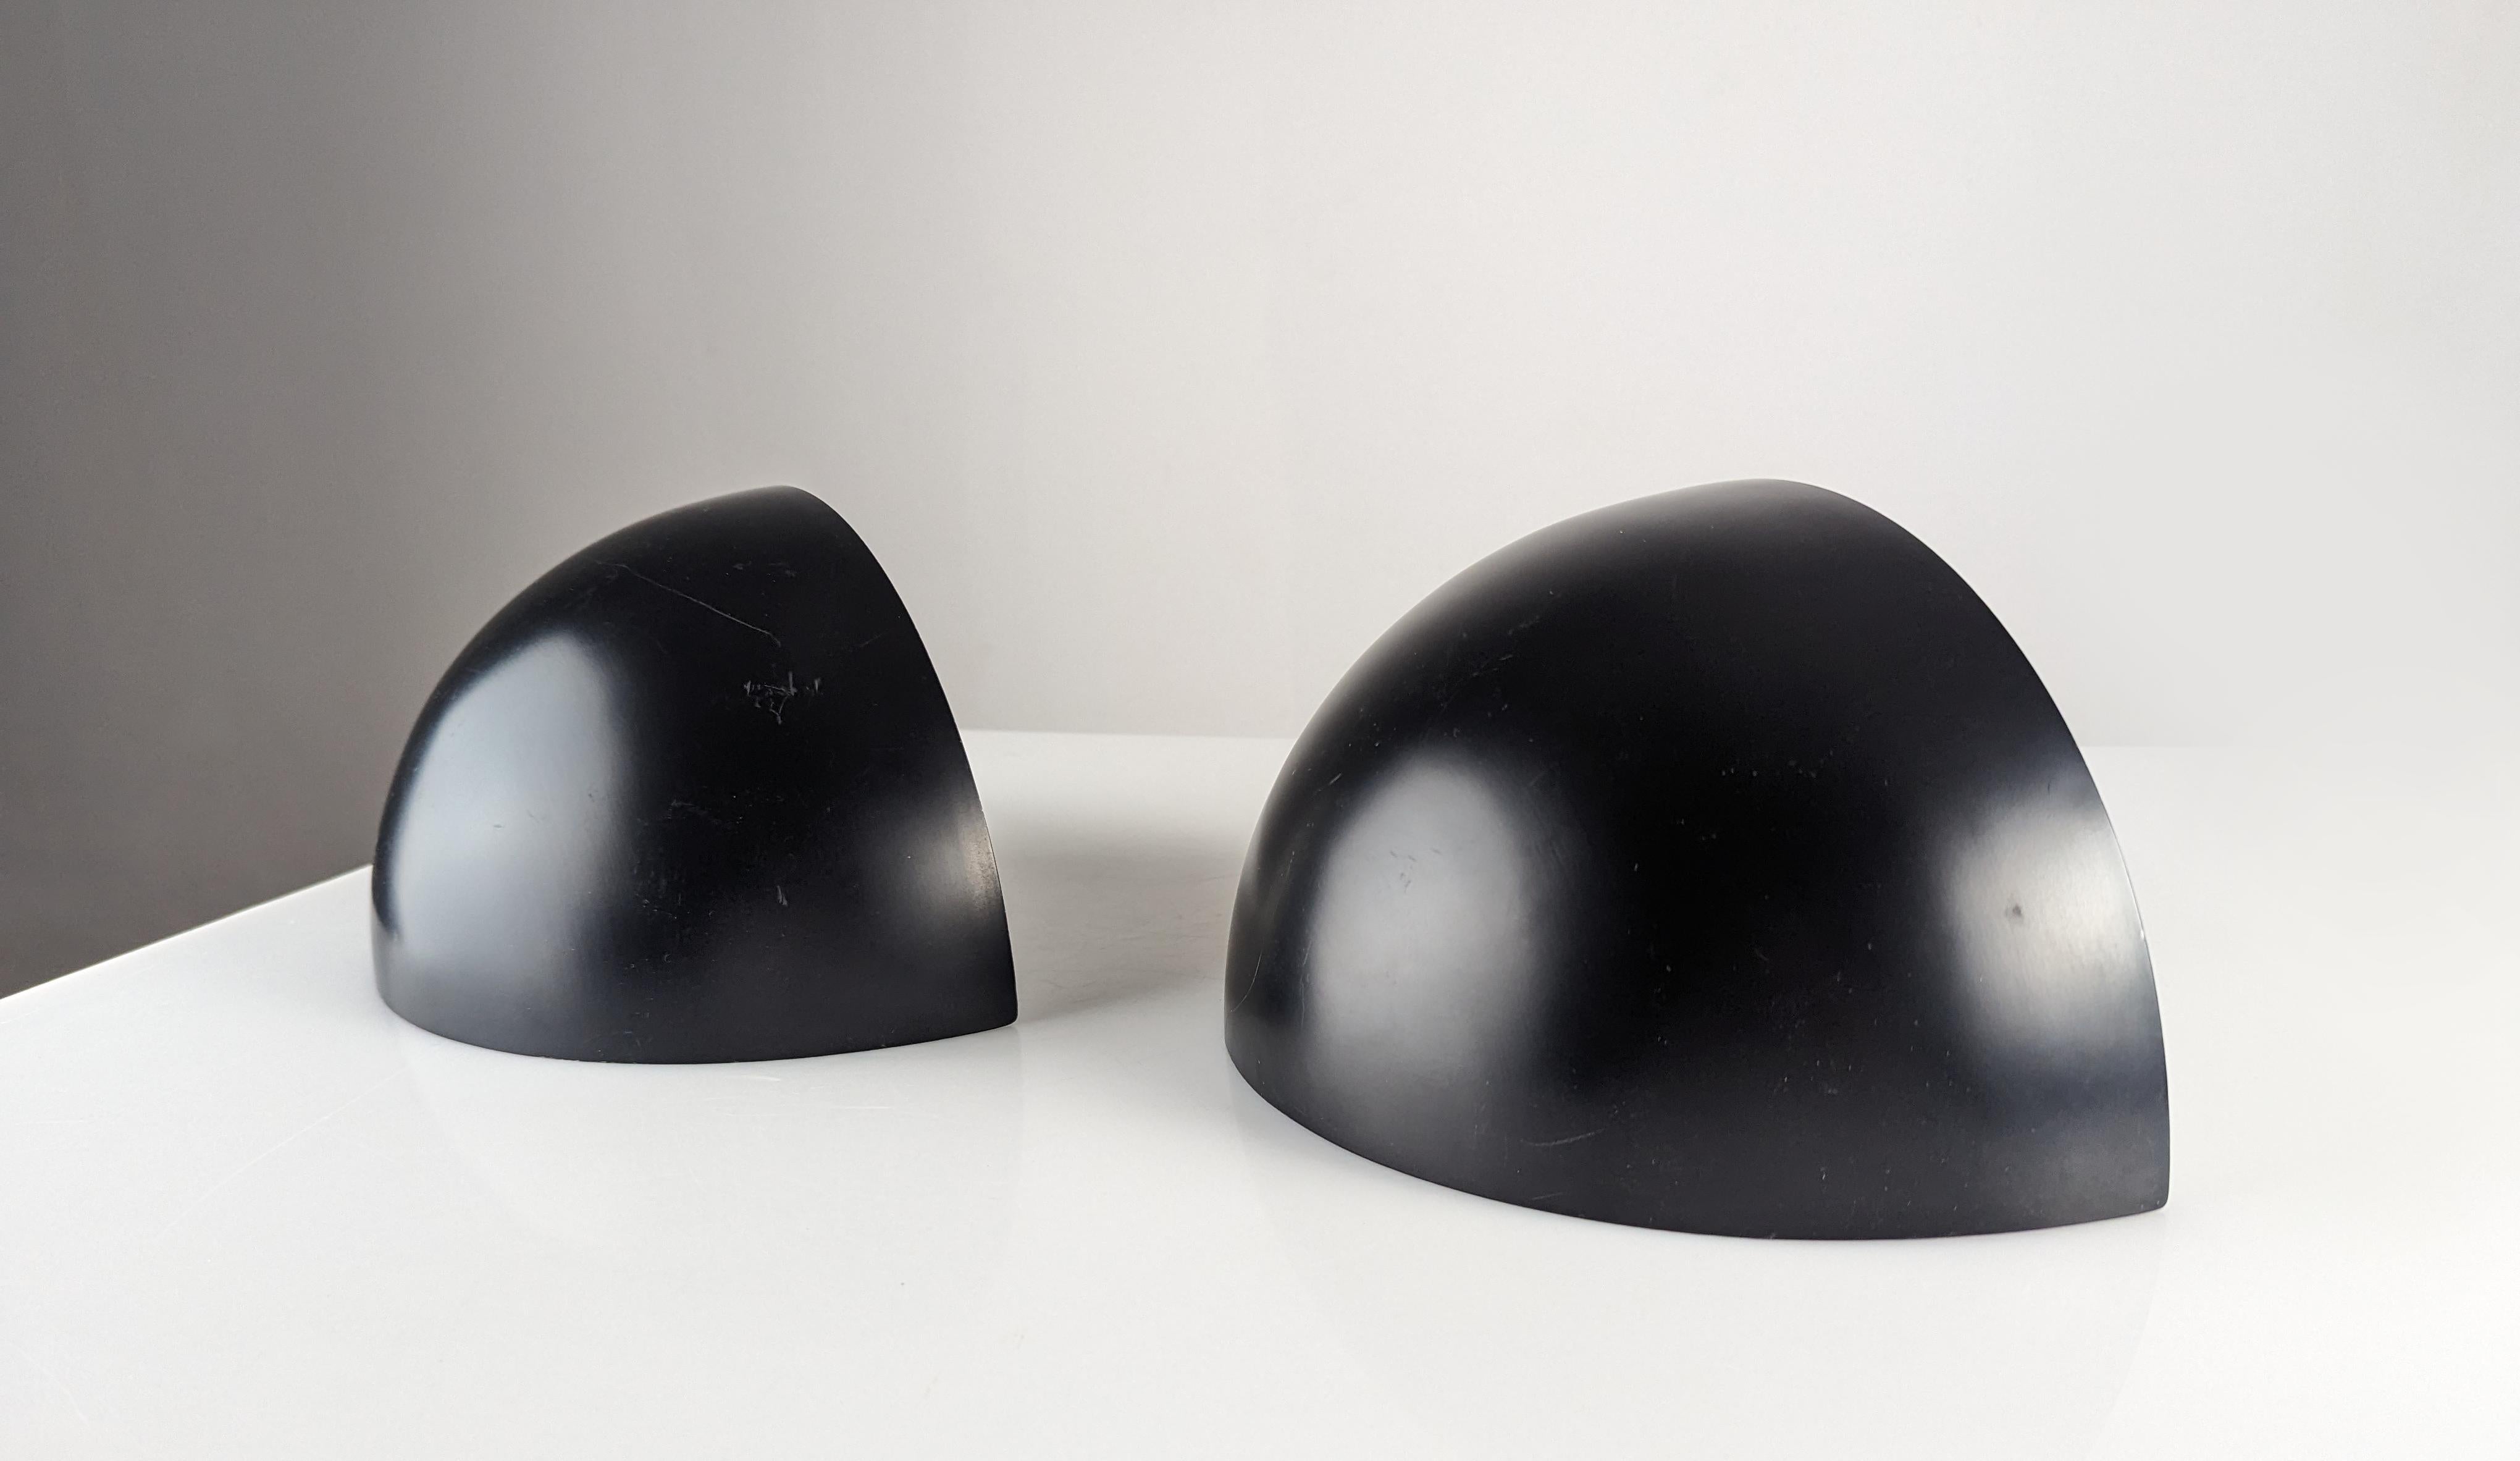 Pair of sconces with a fantastic half-sphere design in color black by Jose Jou Vilas.

Dimensions: 13.5 cm high x 28 cm wide x 14 cm deep